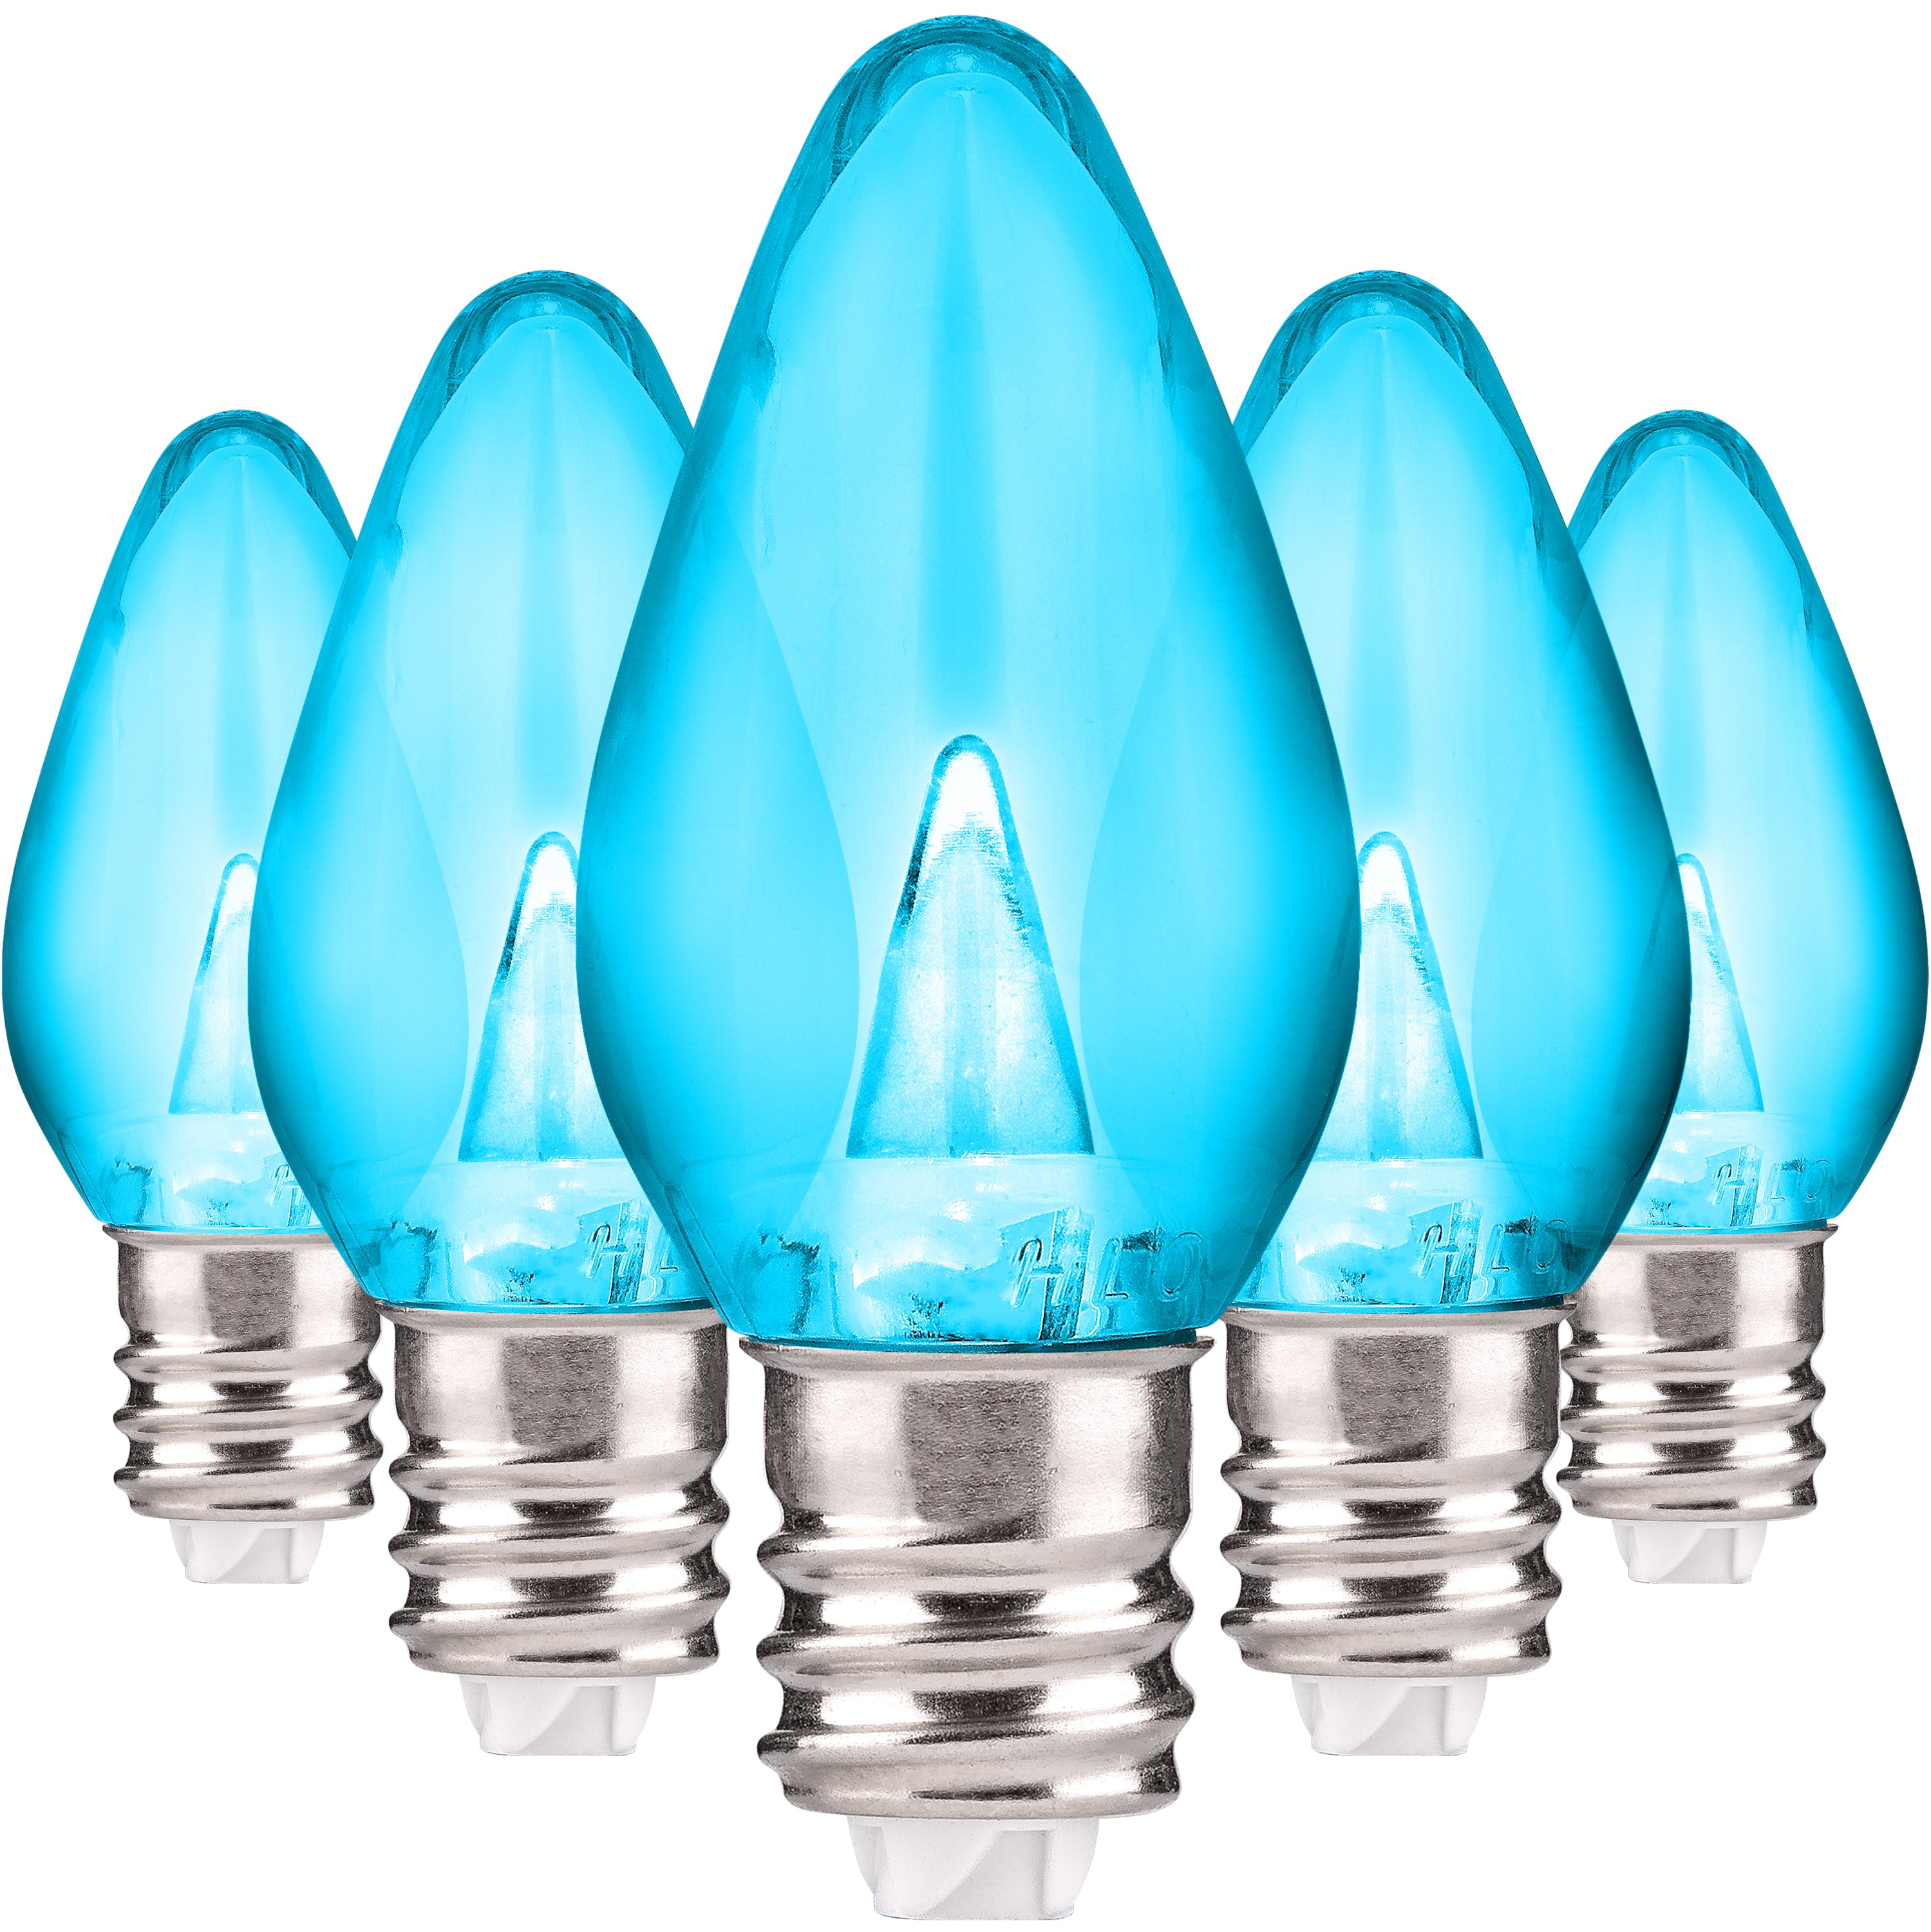 C7 LED Christmas Light Bulbs